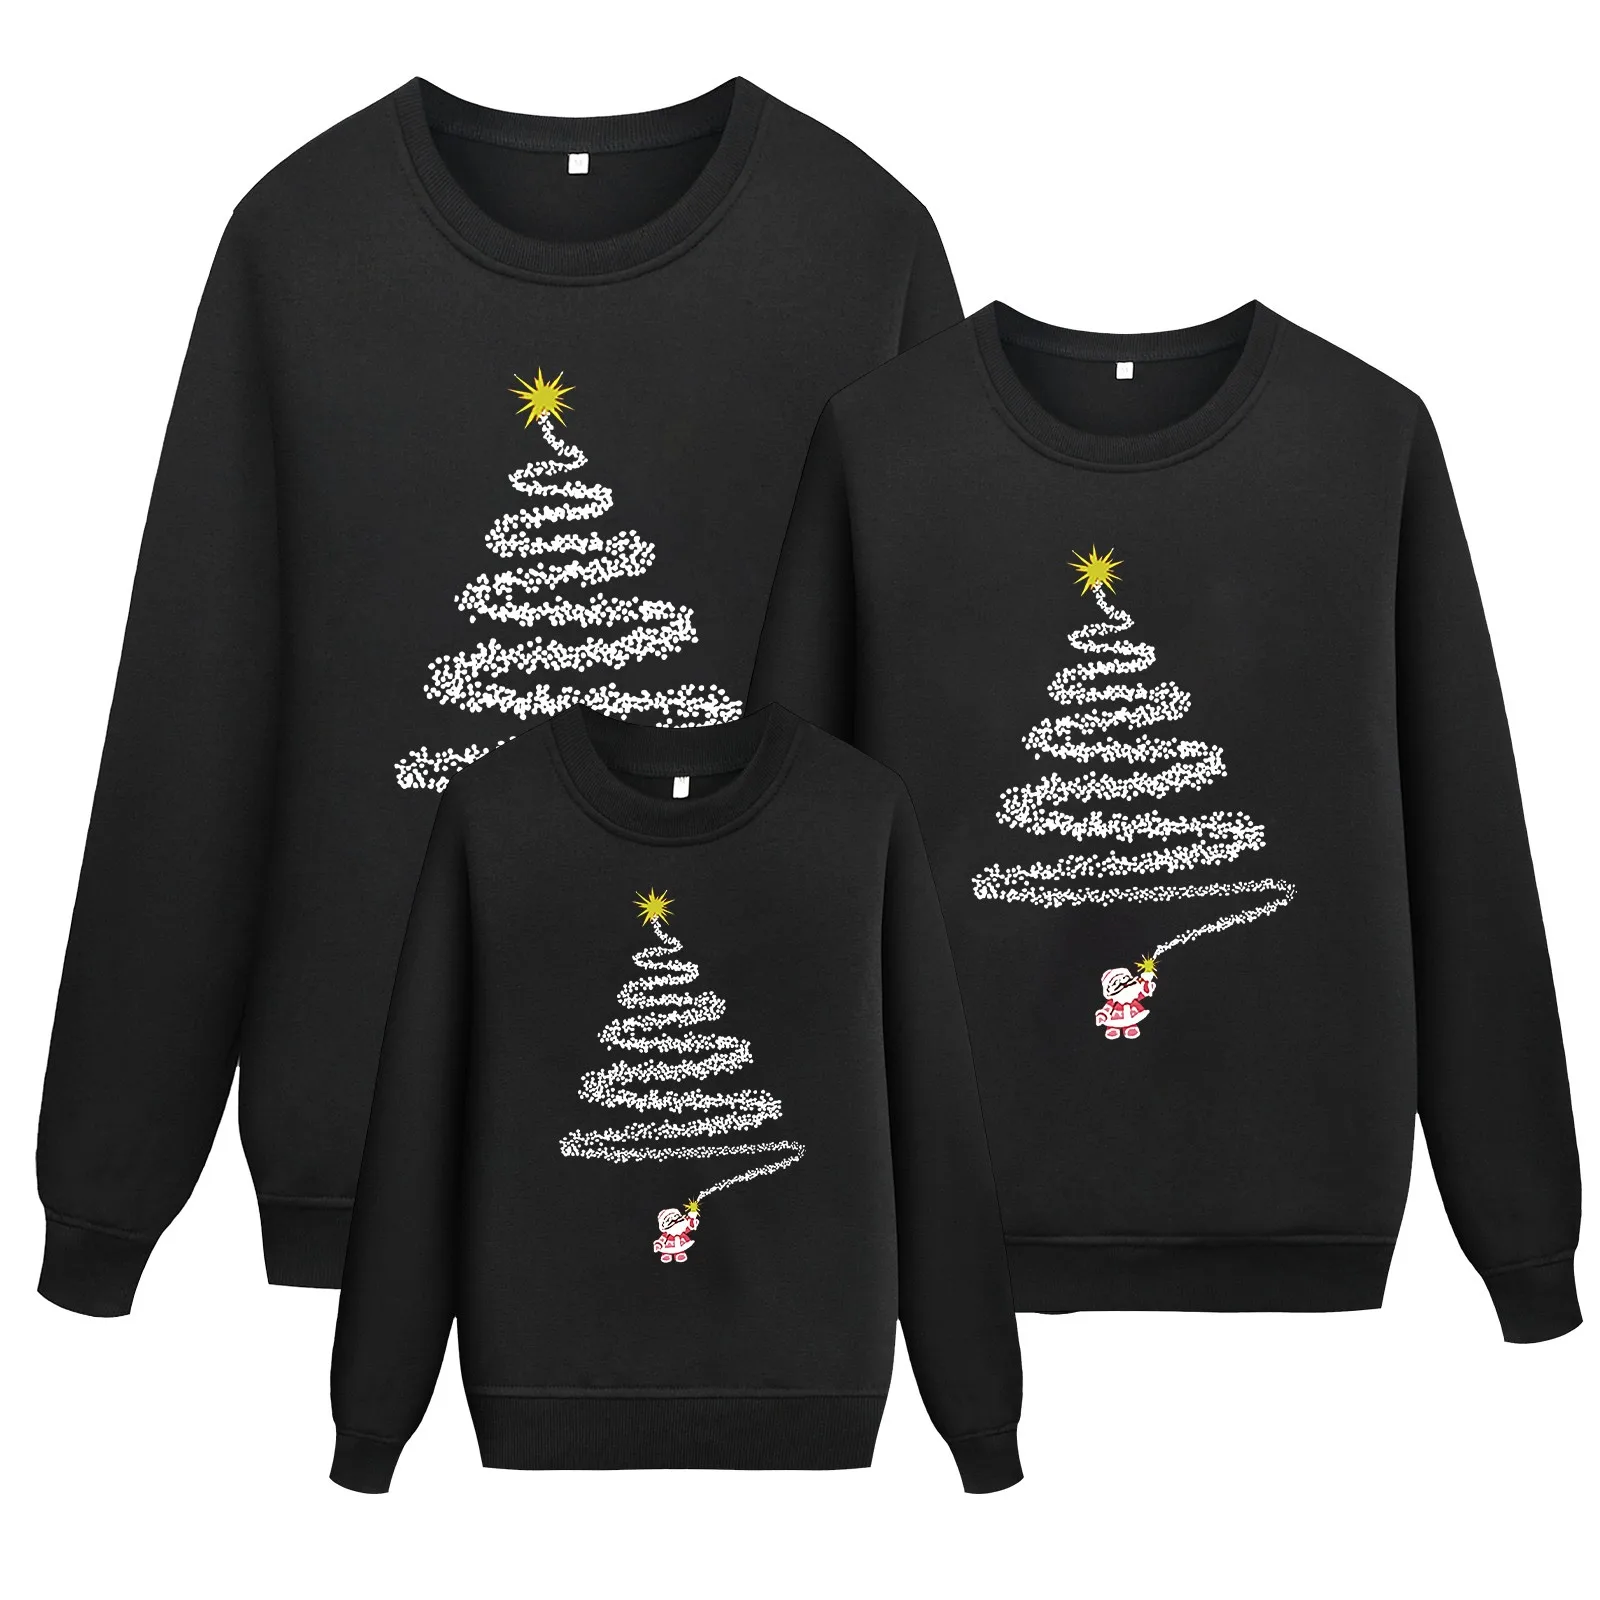 TARIENDY Womens Long Sleeve Tops Cute Xmas Tree Hoodies 2021 Fashion Blouse Hooded Christmas Shirts Sweatshirts with Pocket 